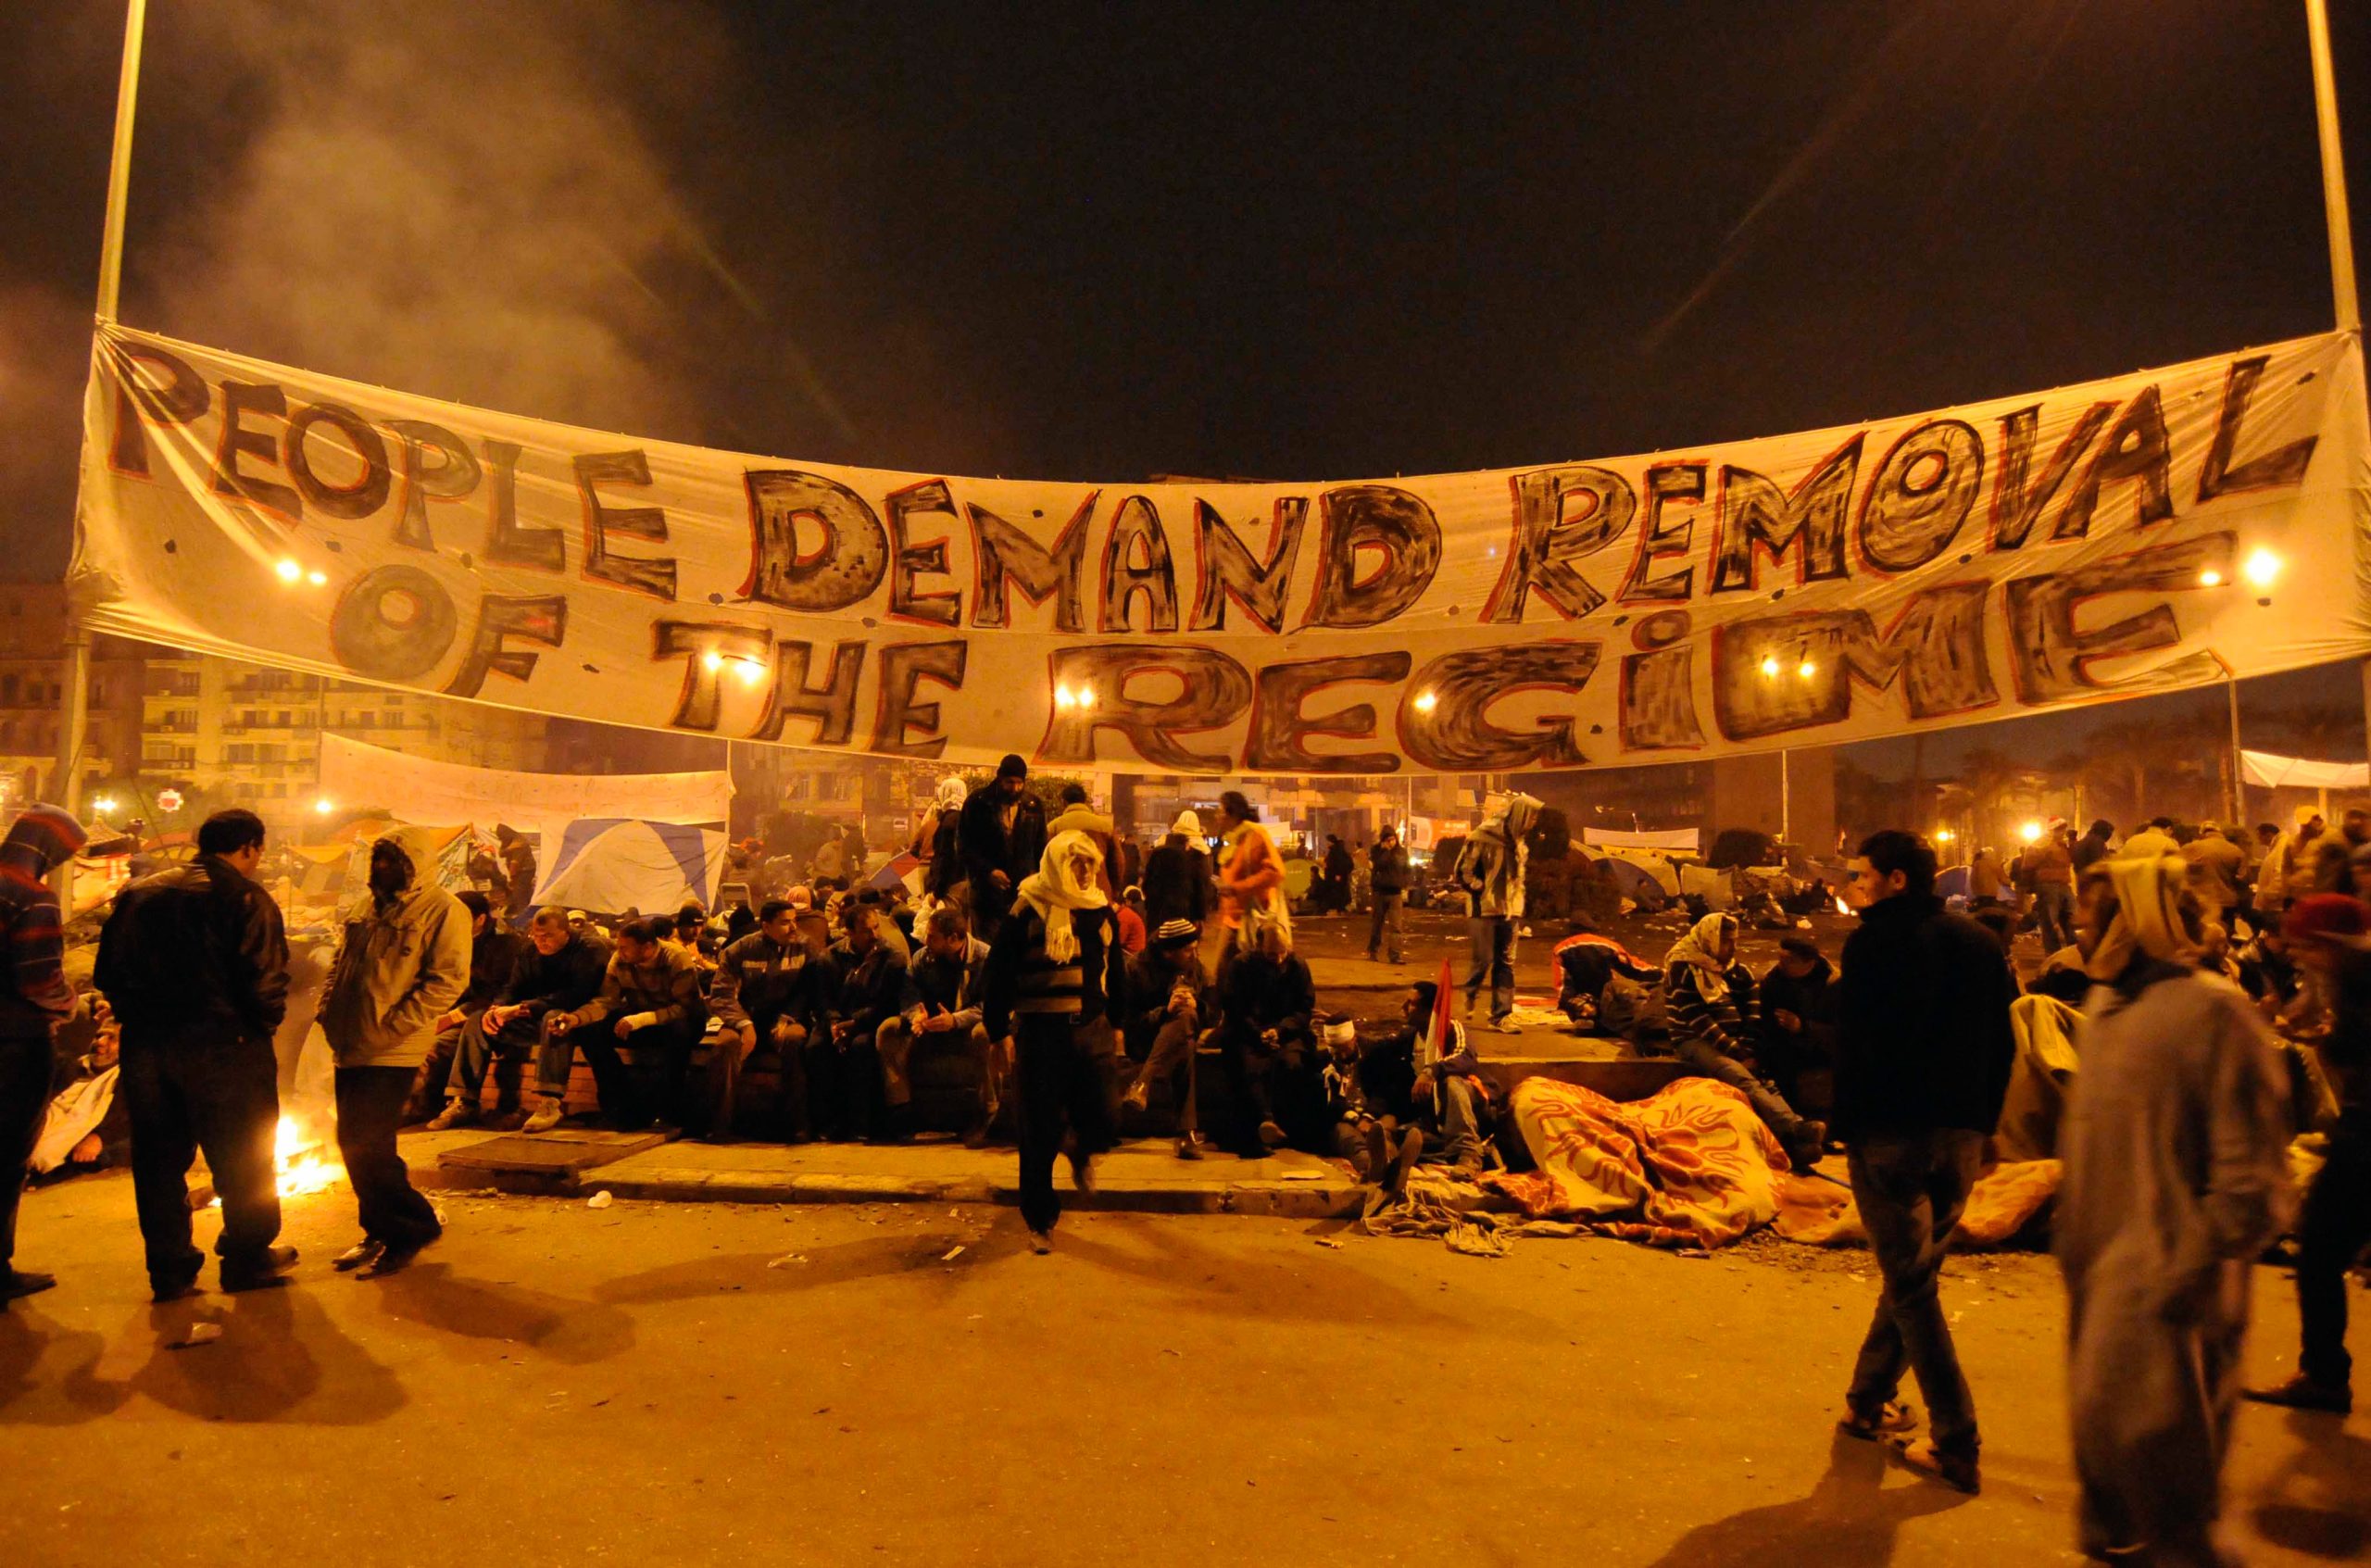 Protesters camping in Tahrir Square demanding the resignation of Hosni Mubarak, 5 January, 2011. Source: Hans Lucas via Reuters.